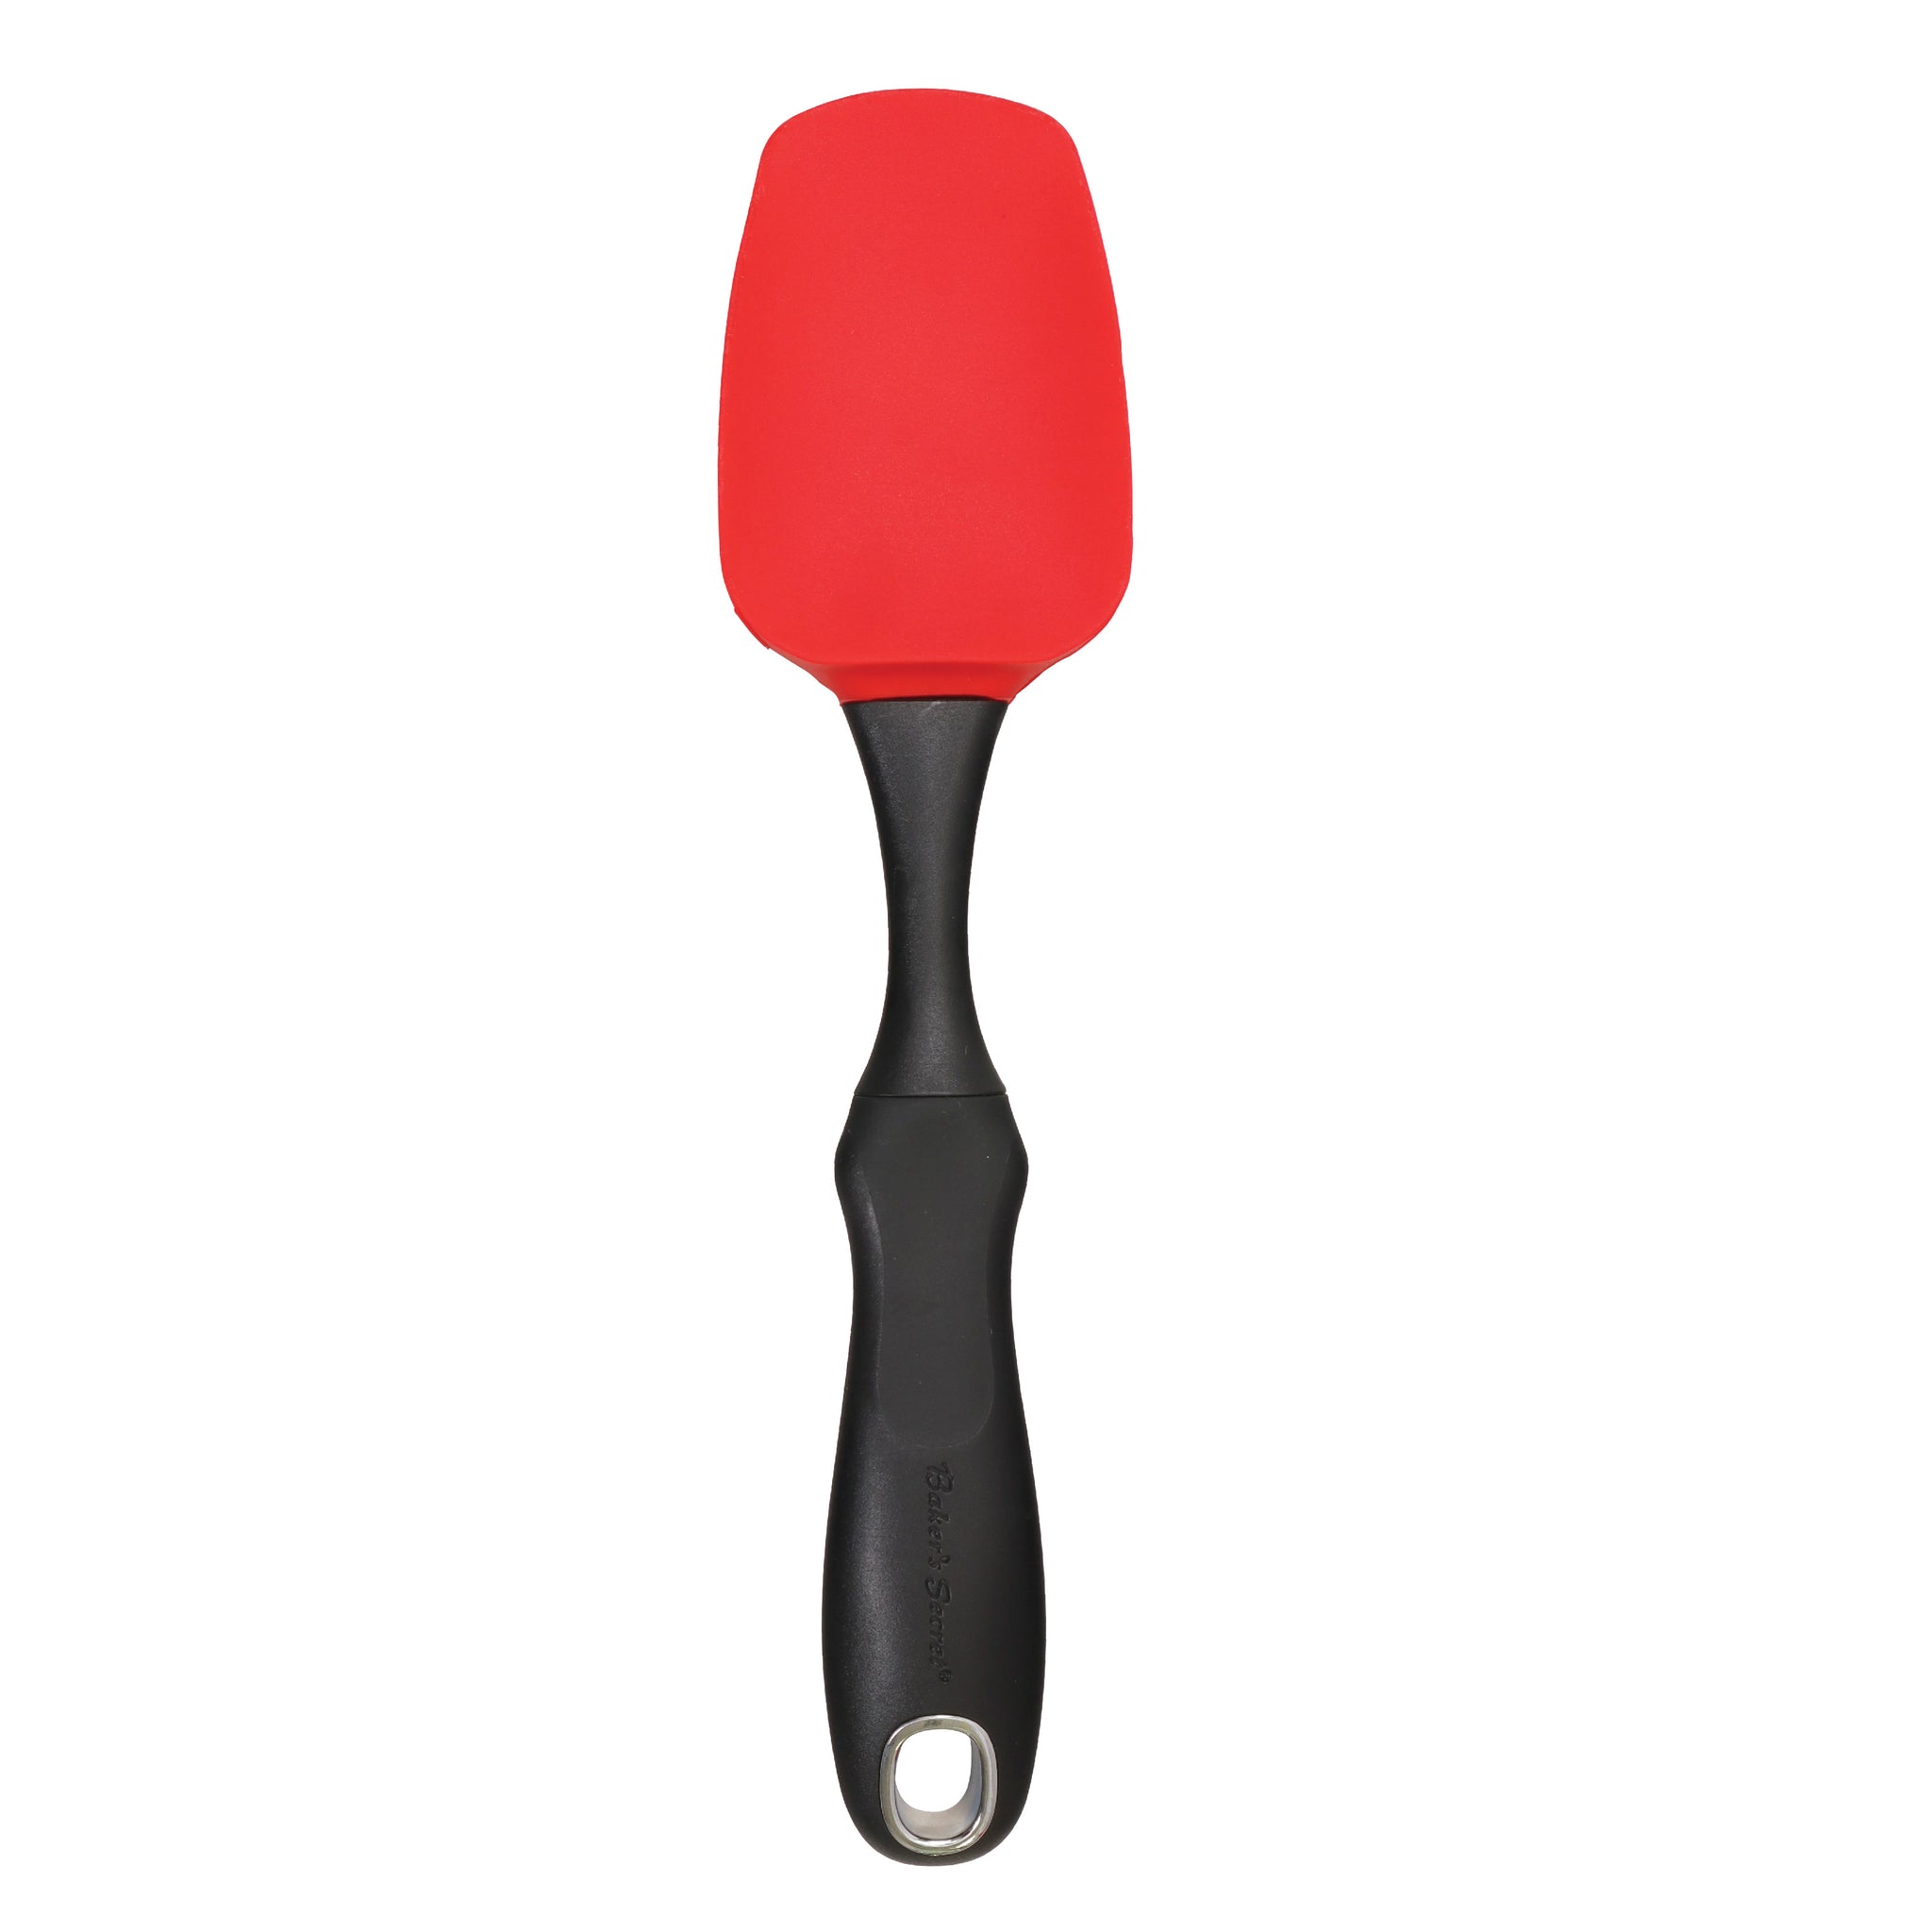 2 in 1 Spoon & Spatula 10" Red Cookware Accessories - Baker's Secret